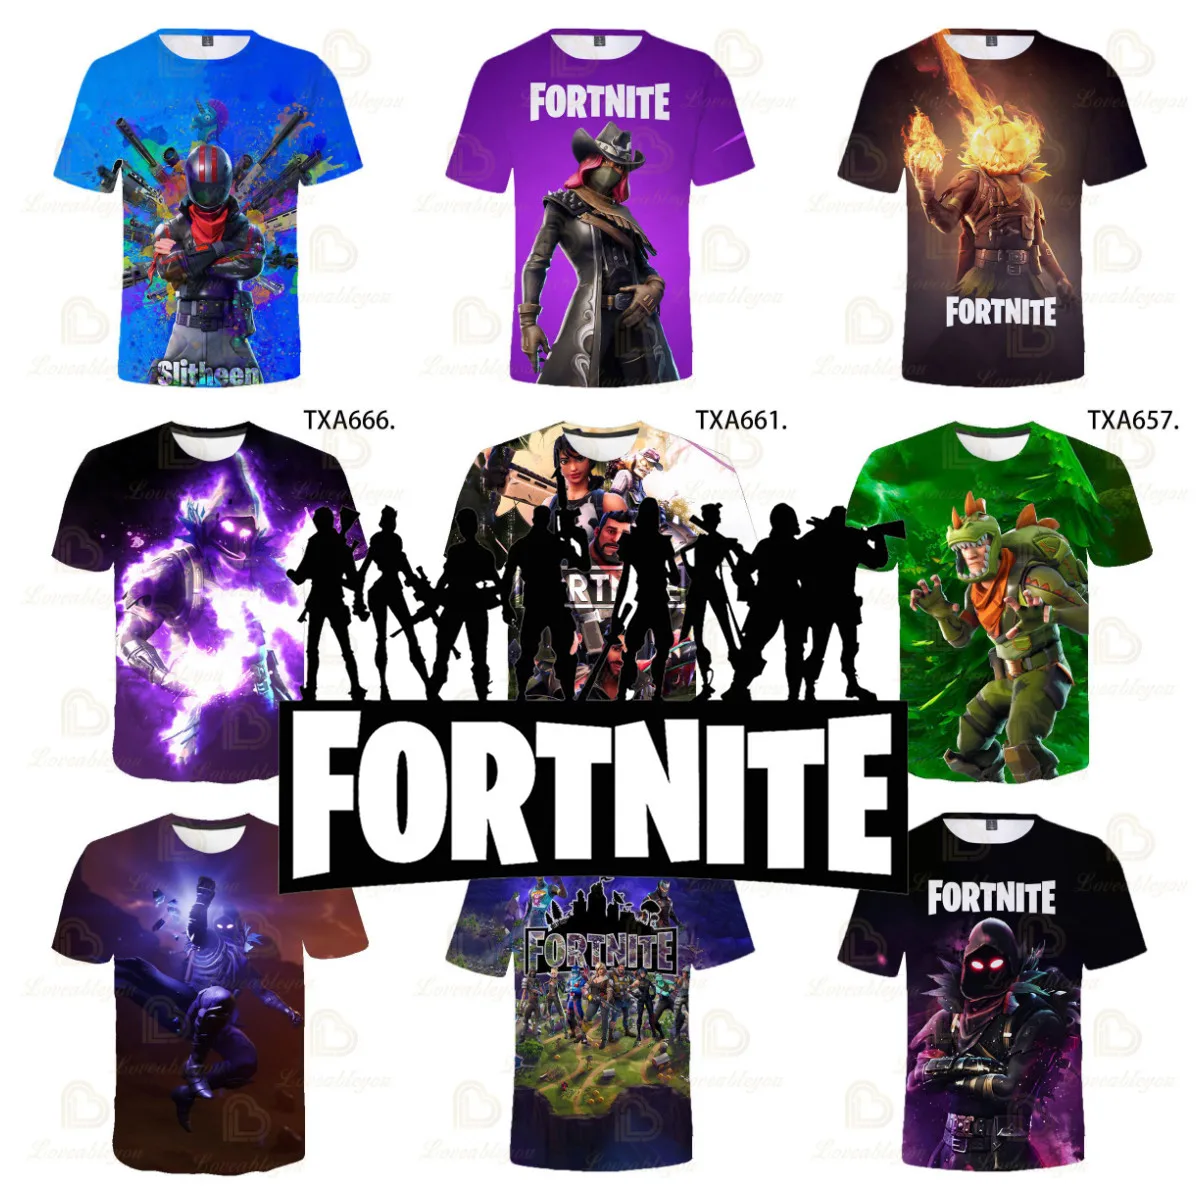 

3d Tshirt Fortnite Shoot Game Battle Royale Victory Sudaderas Children Kids Boys Girls Tops T-shirt Baby Clothes